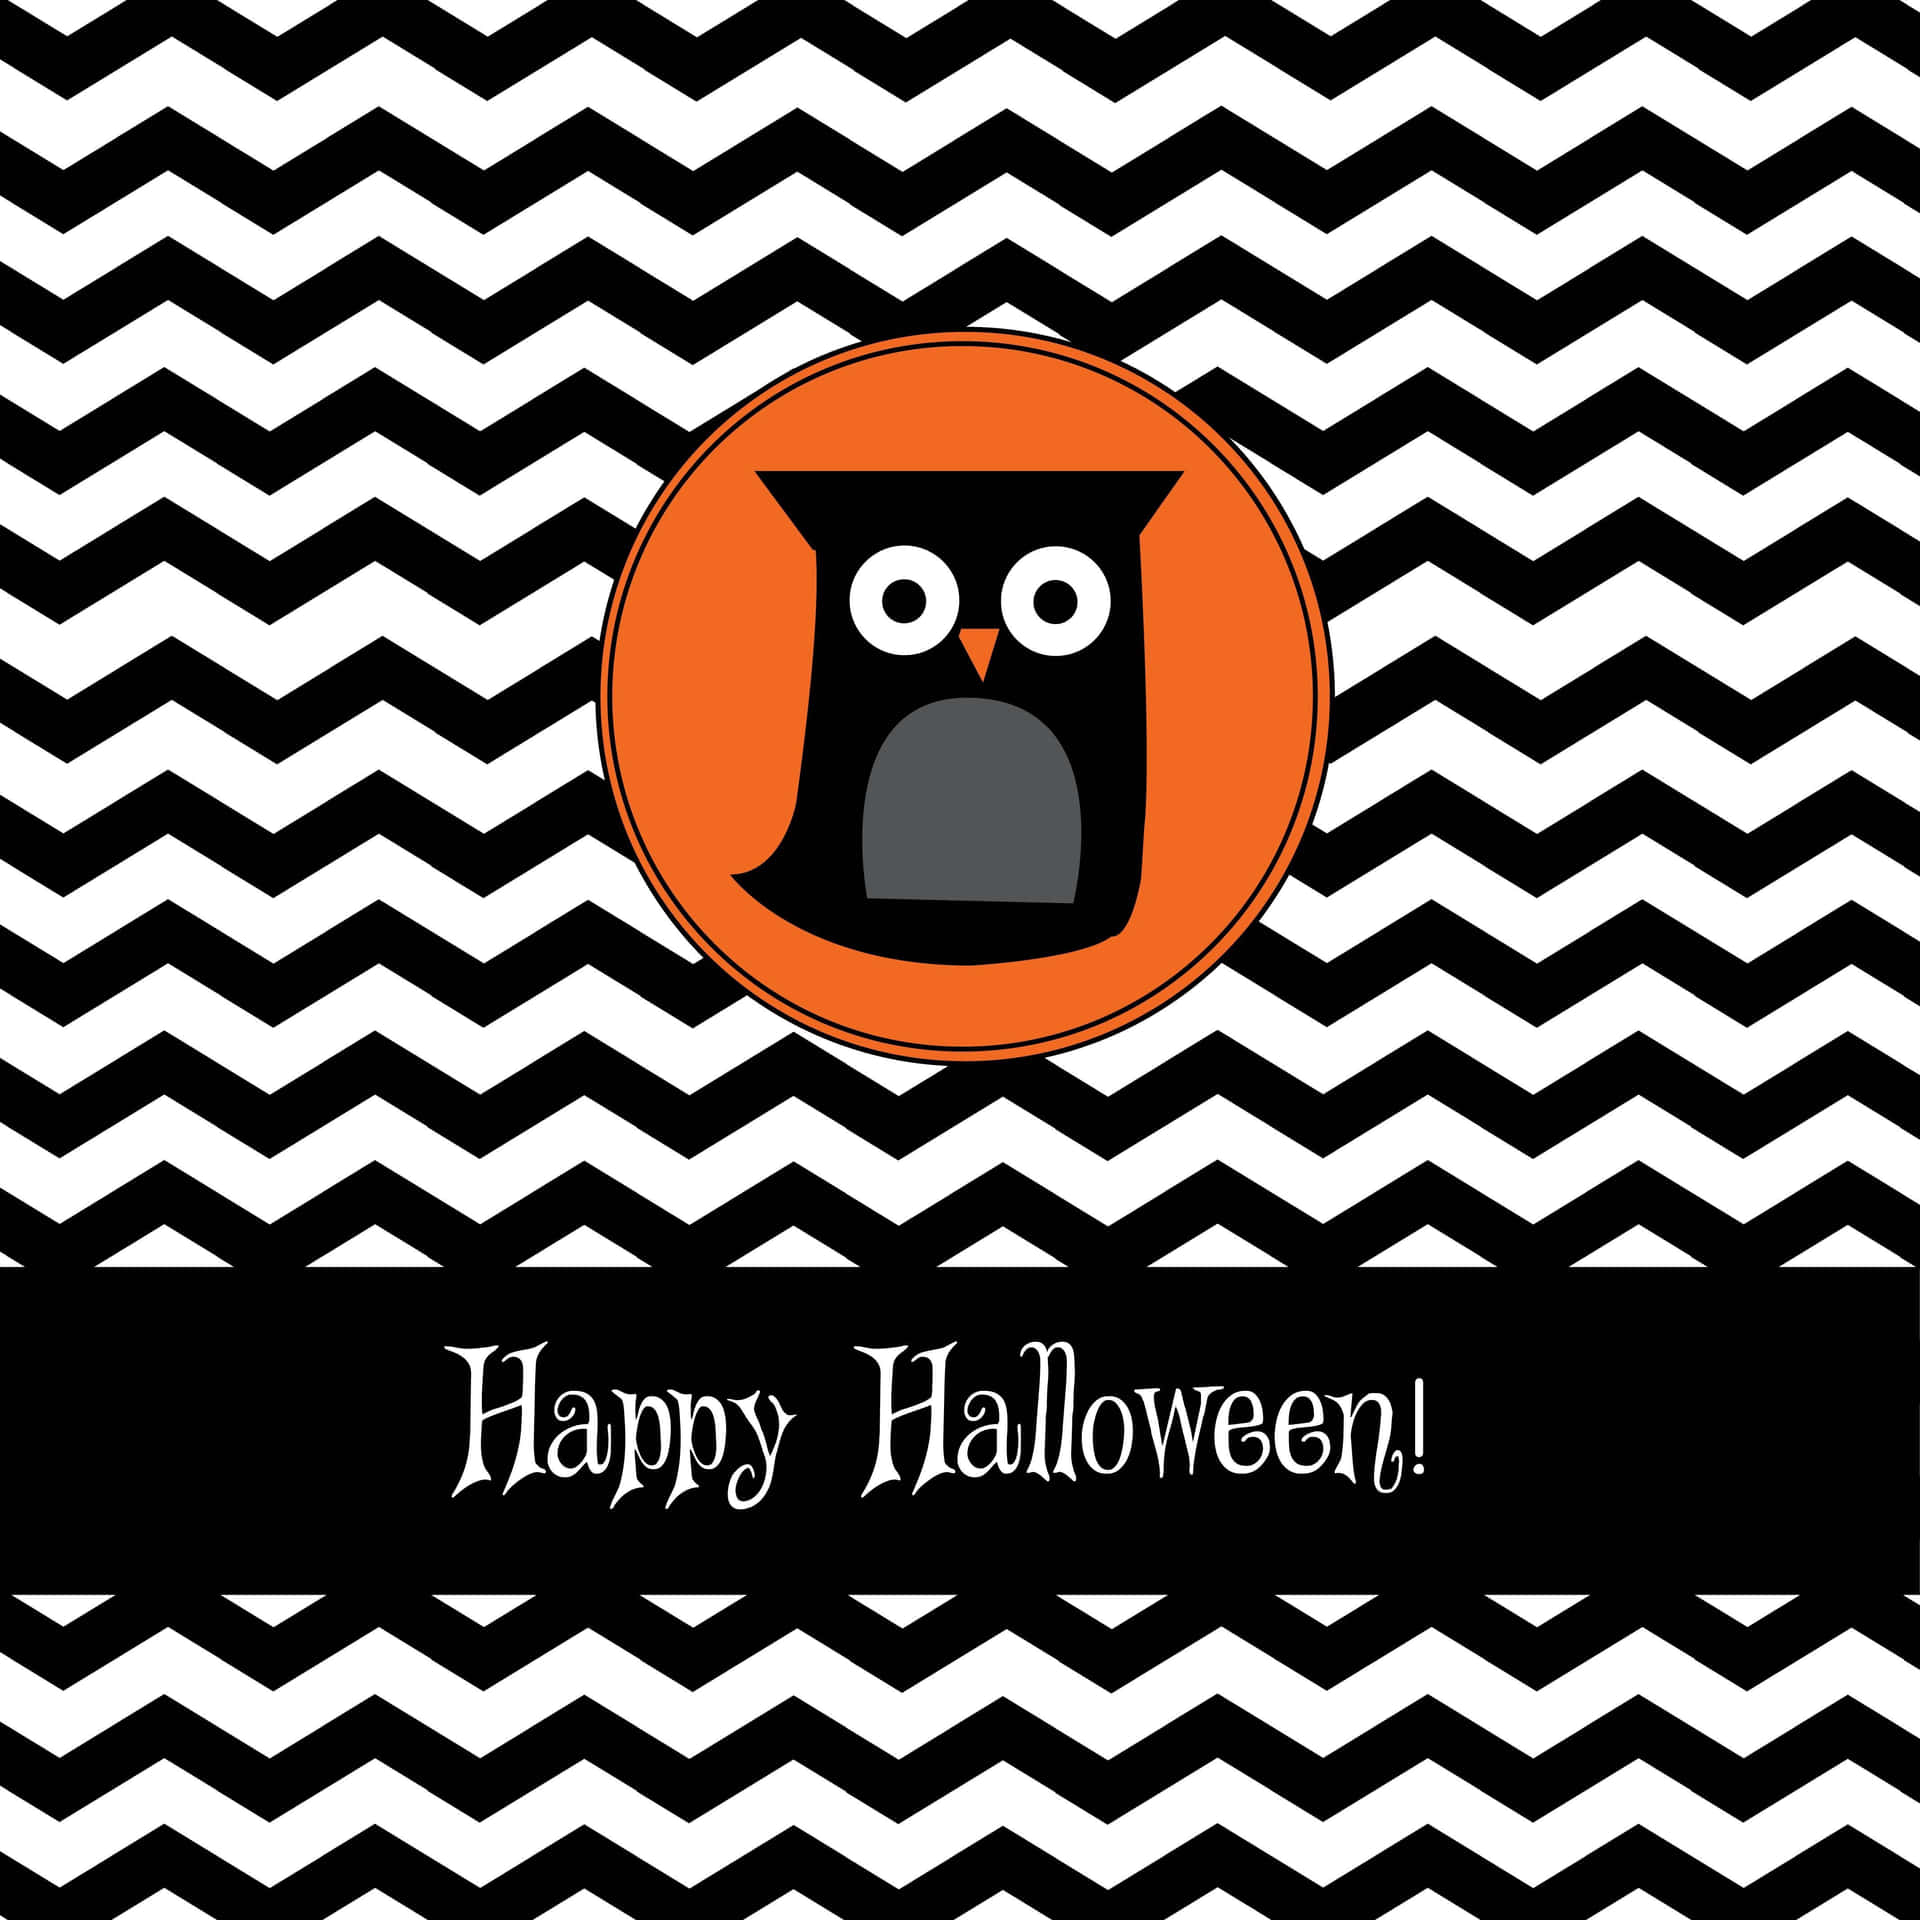 Halloween Cute Black Owl Zigzag Line Art Picture